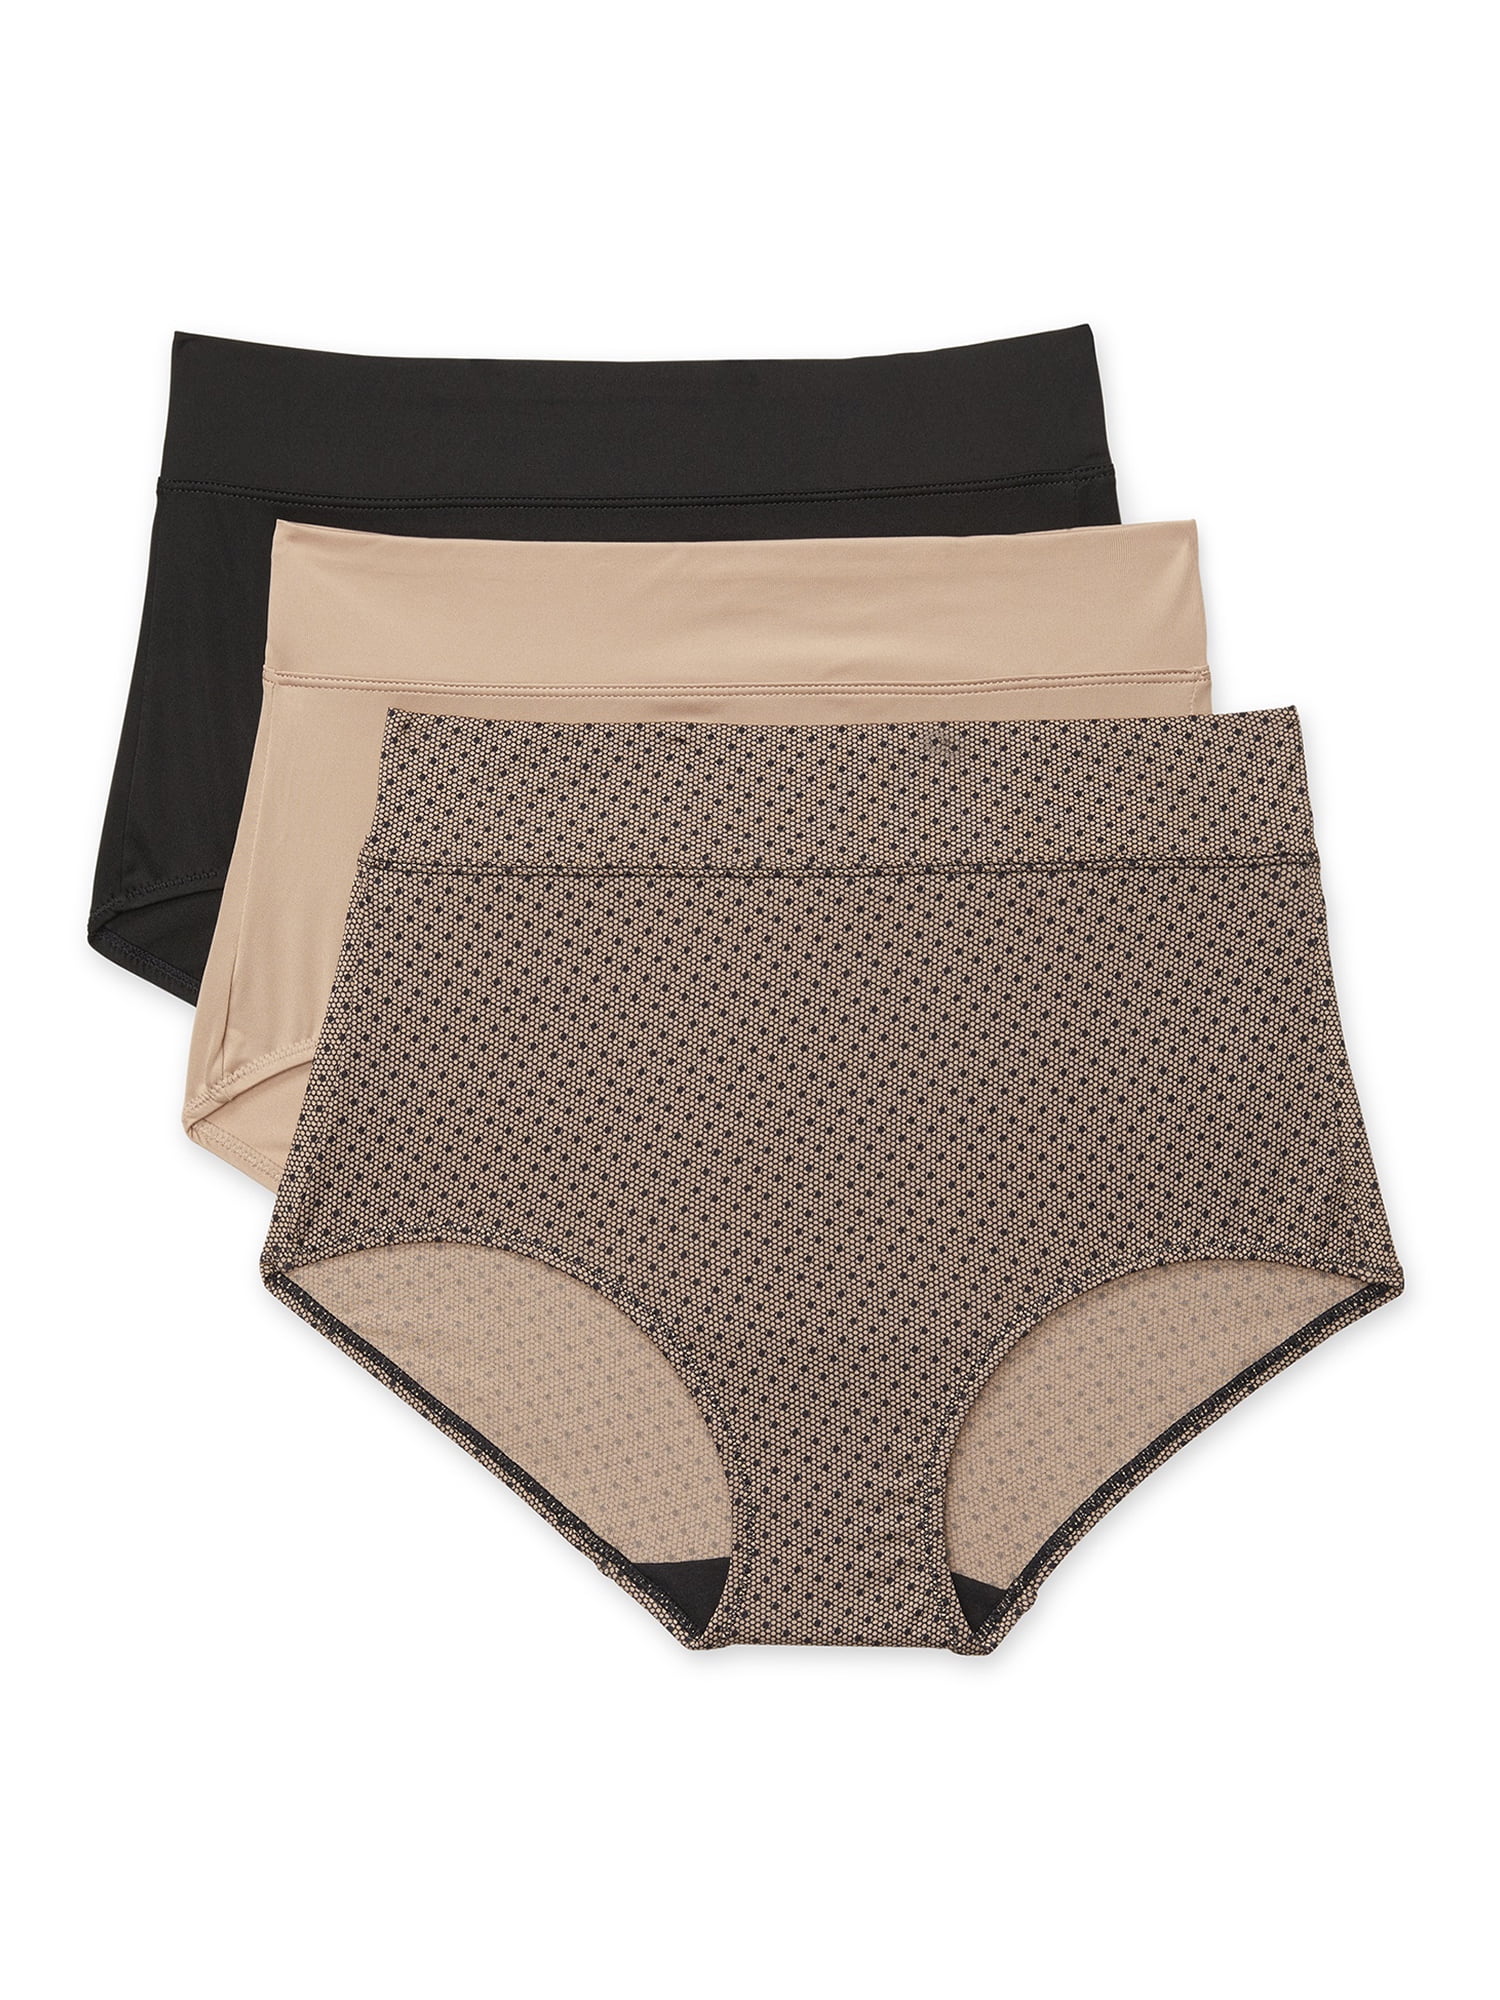 Joyspun Women's Cotton Thong Panties, 6-Pack, Sizes S to 2XL 